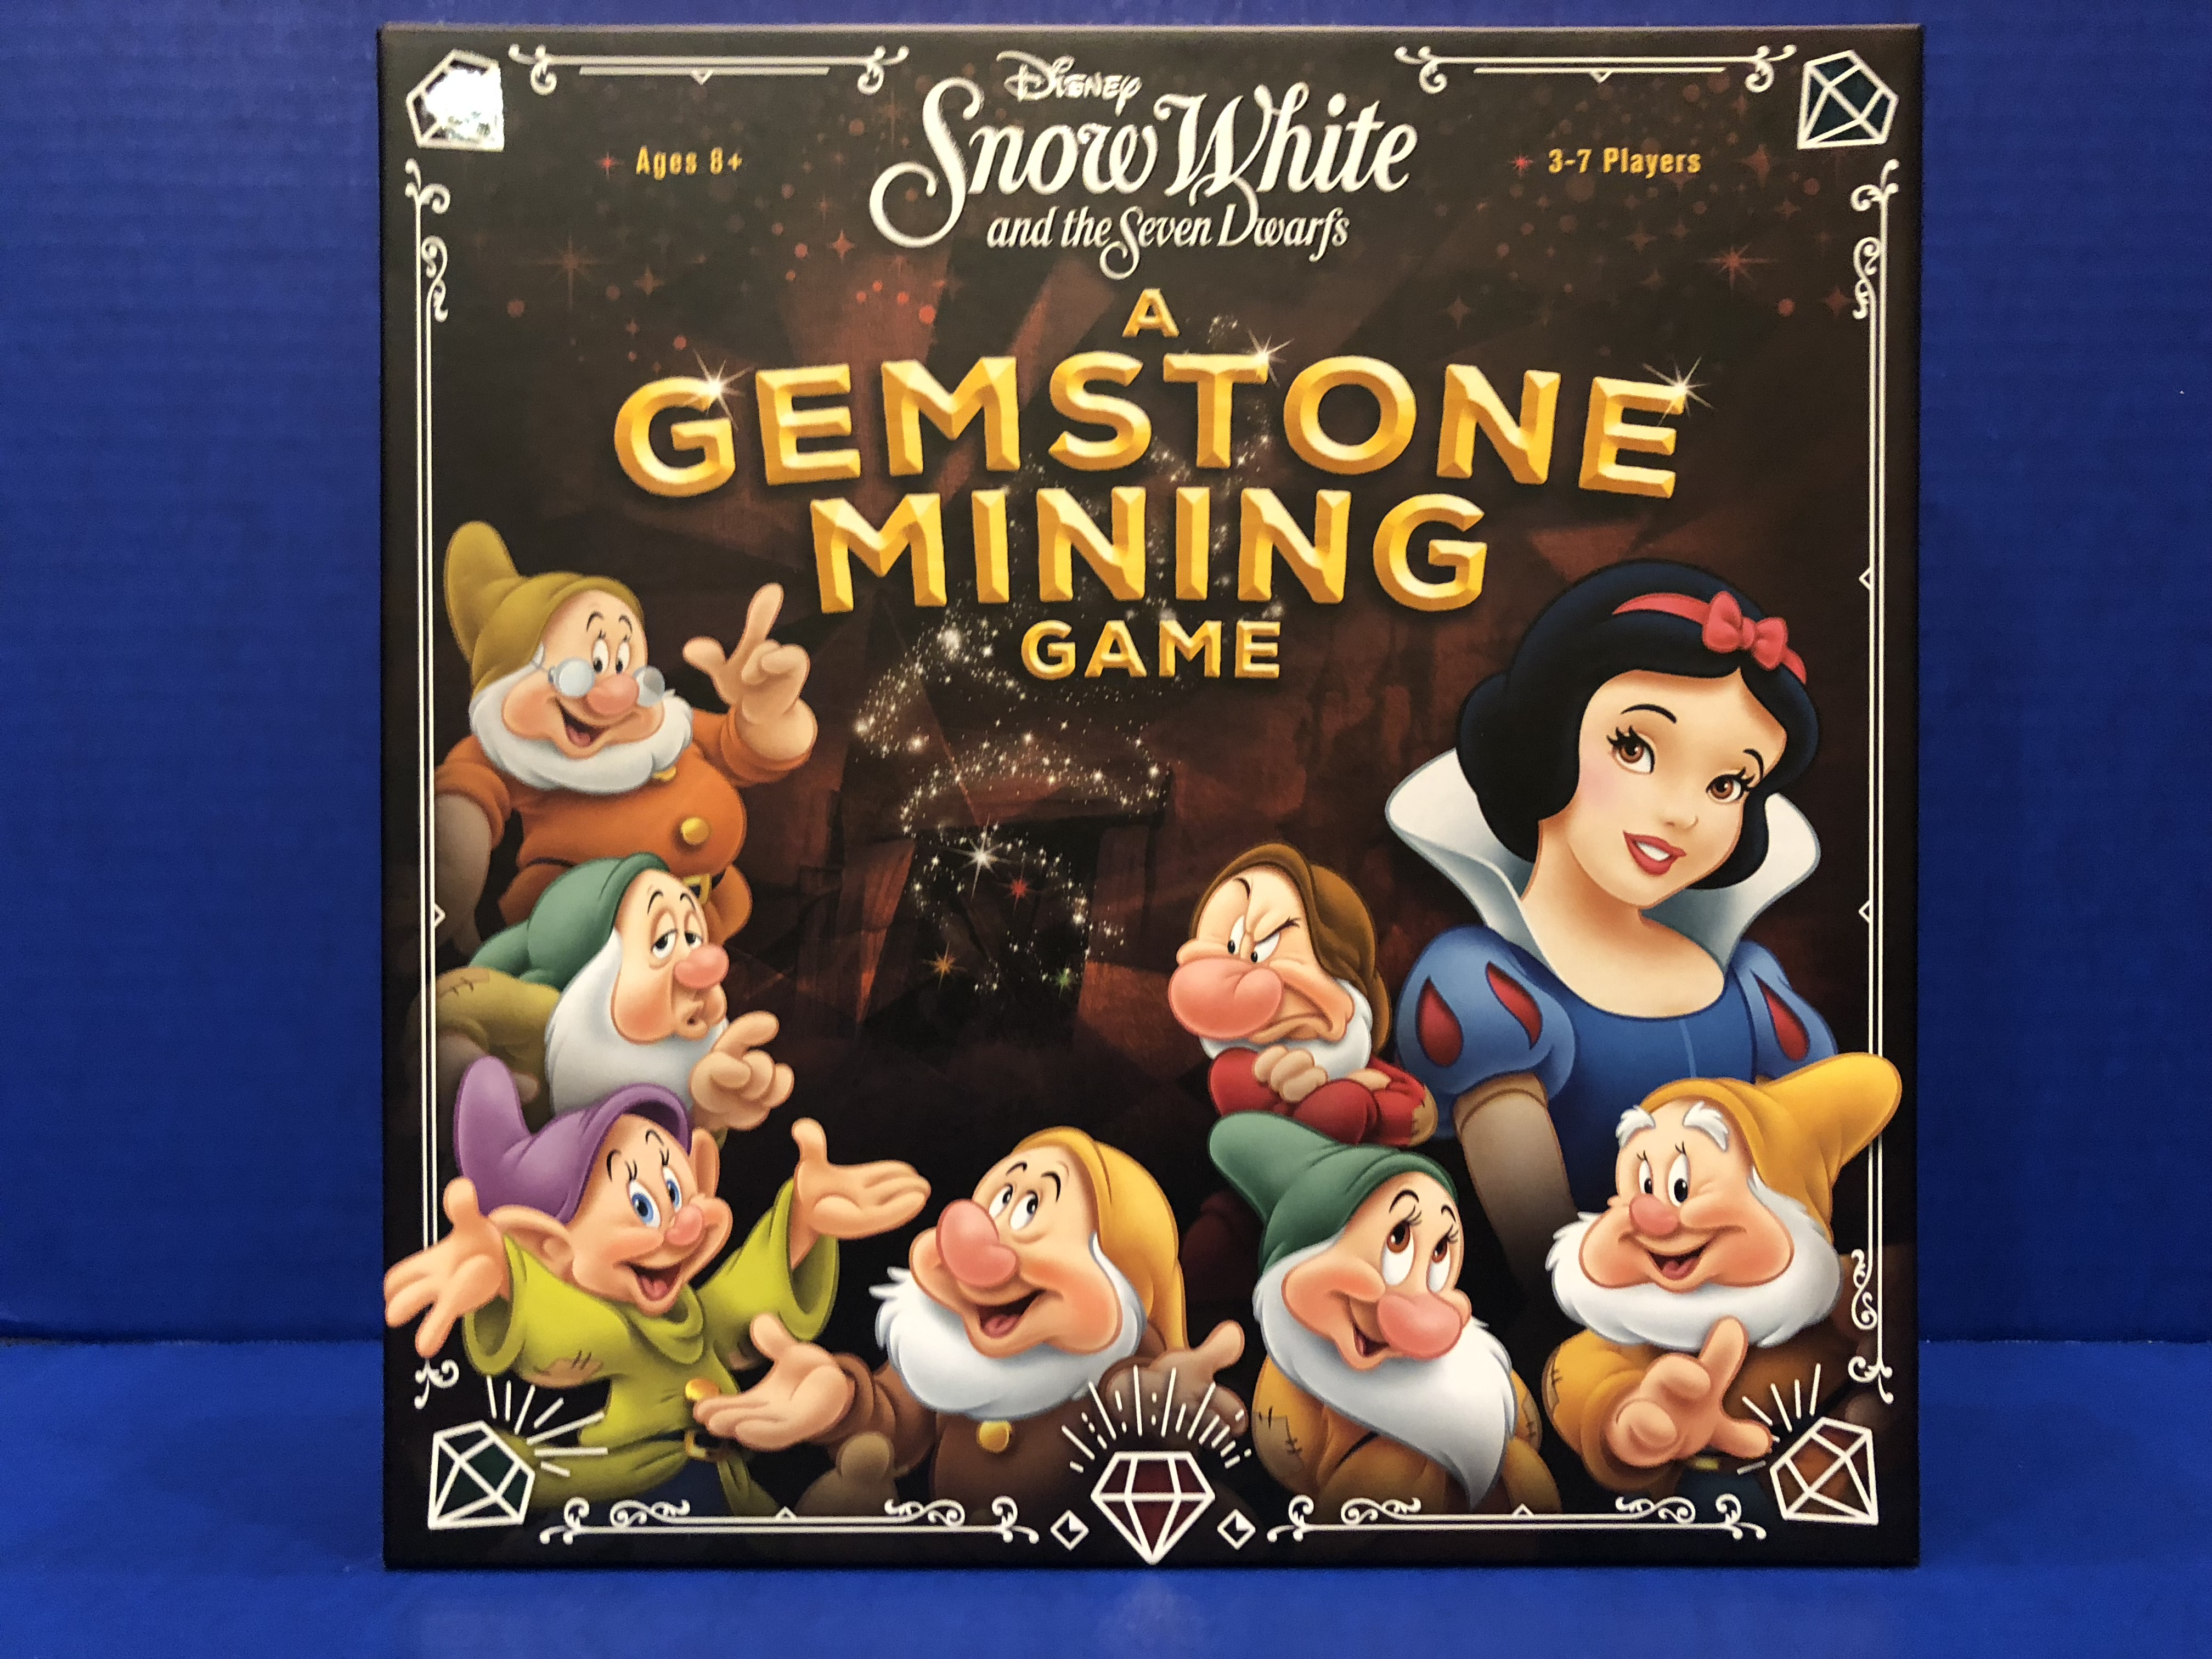 A Gemstone Mining Game